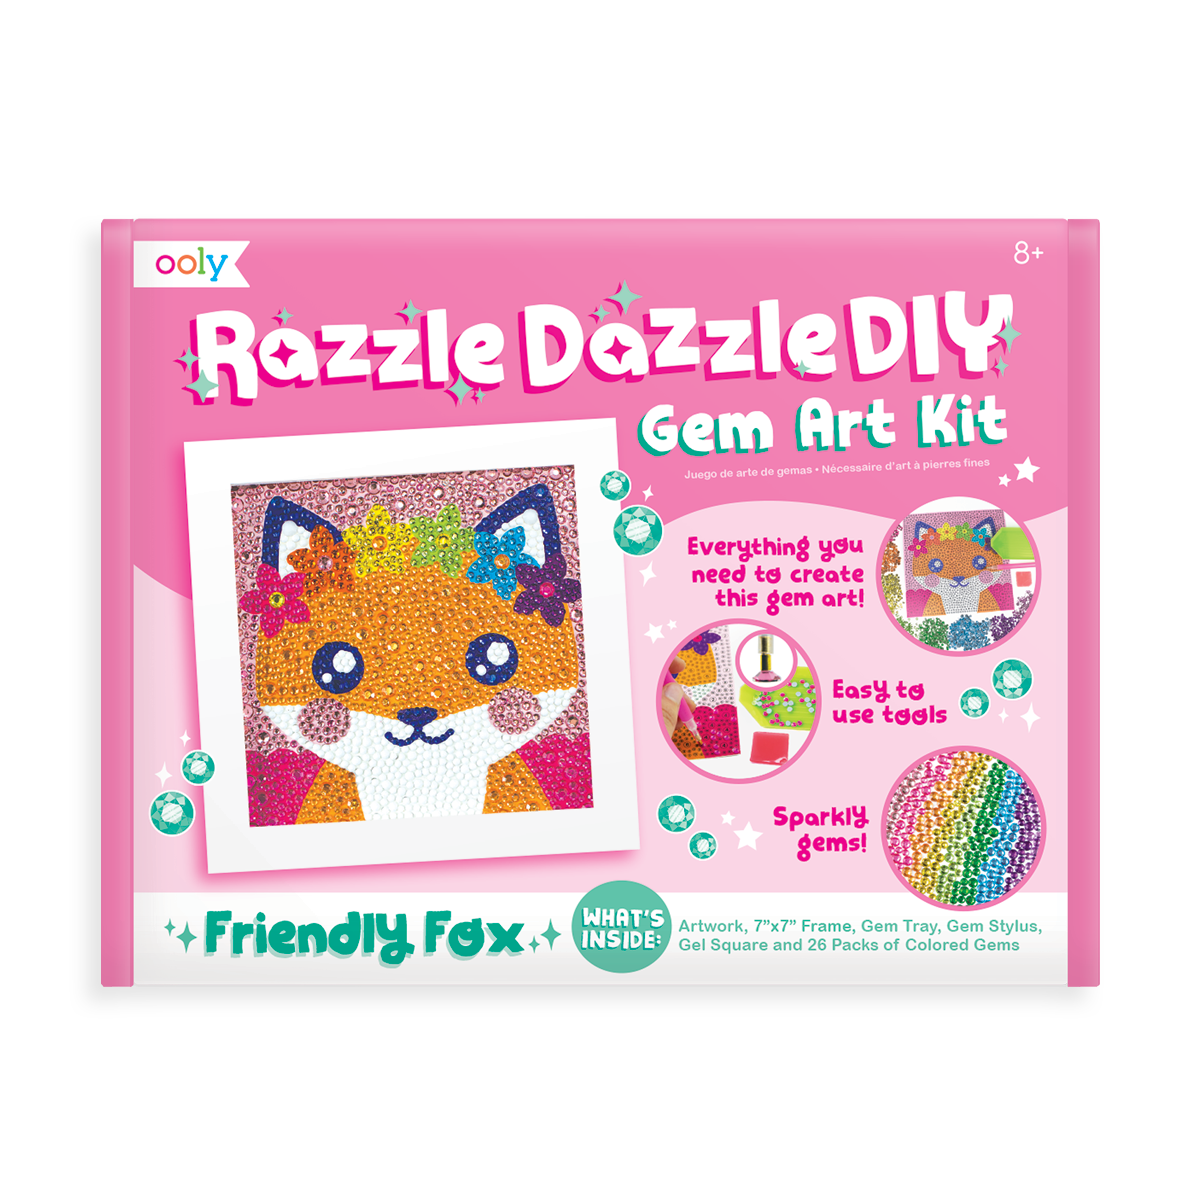 OOLY Razzle Dazzle DIY Gem Art Kit - Friendly Fox in package (front).